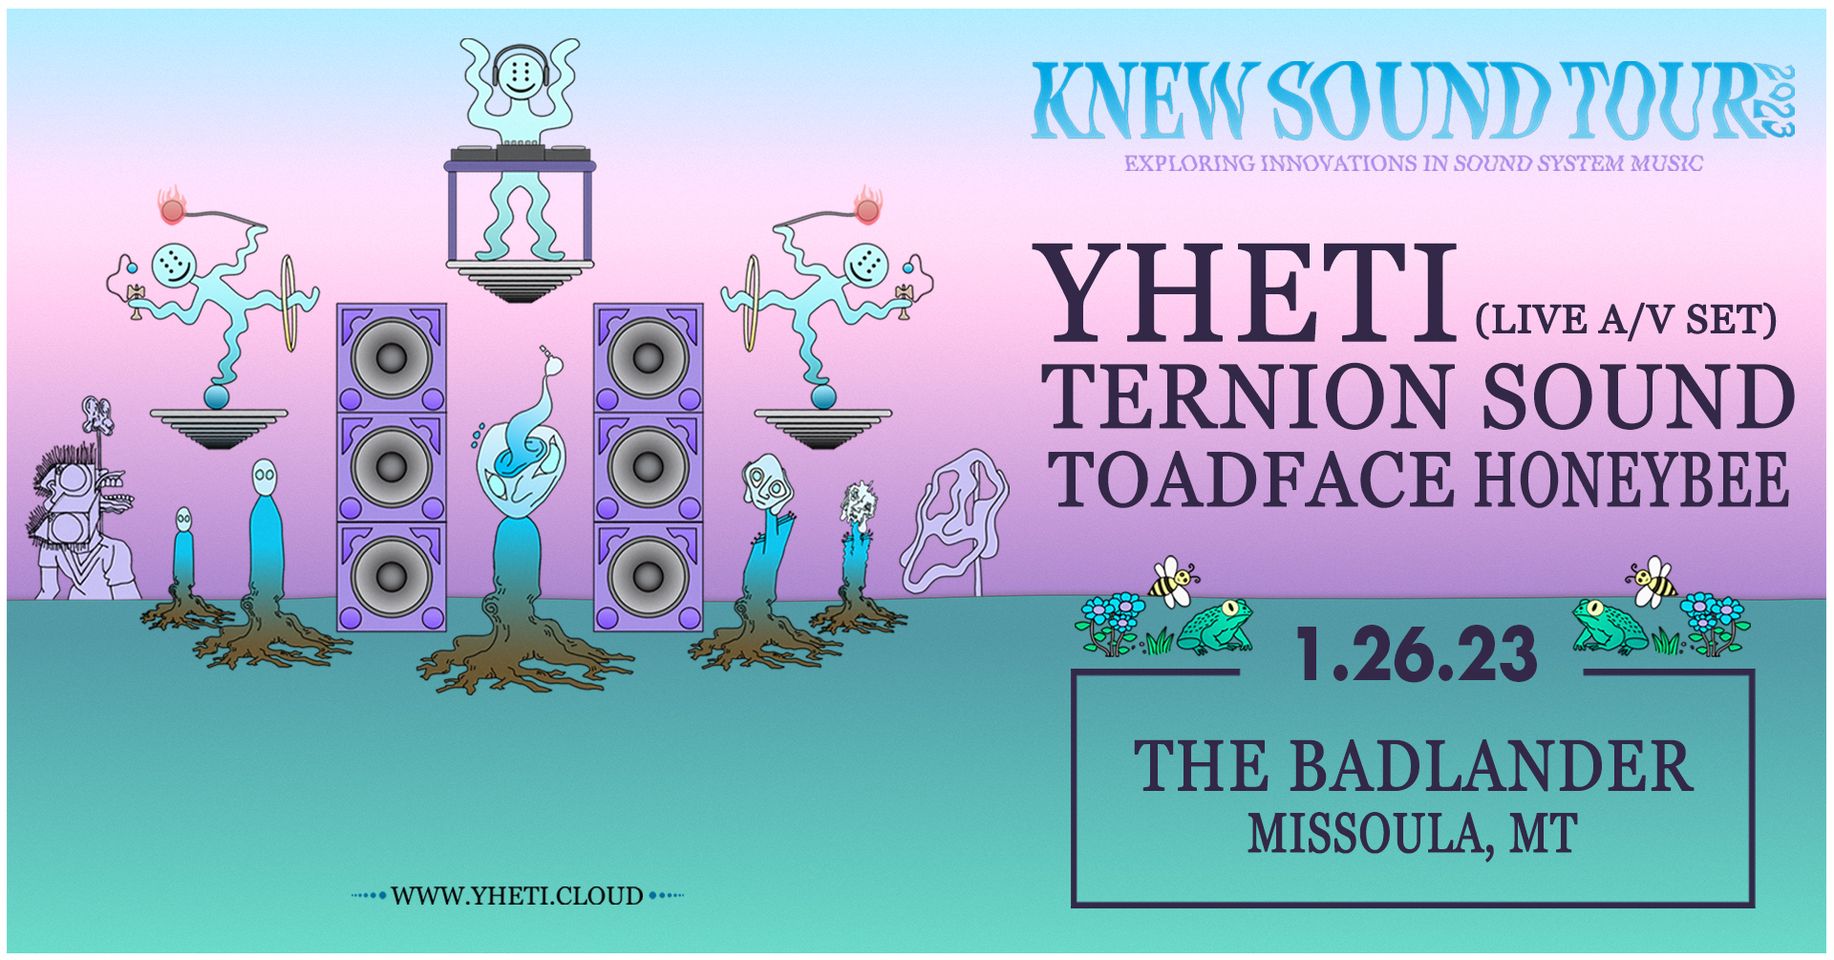 Yheti at The Badlander: Knew Sound Tour